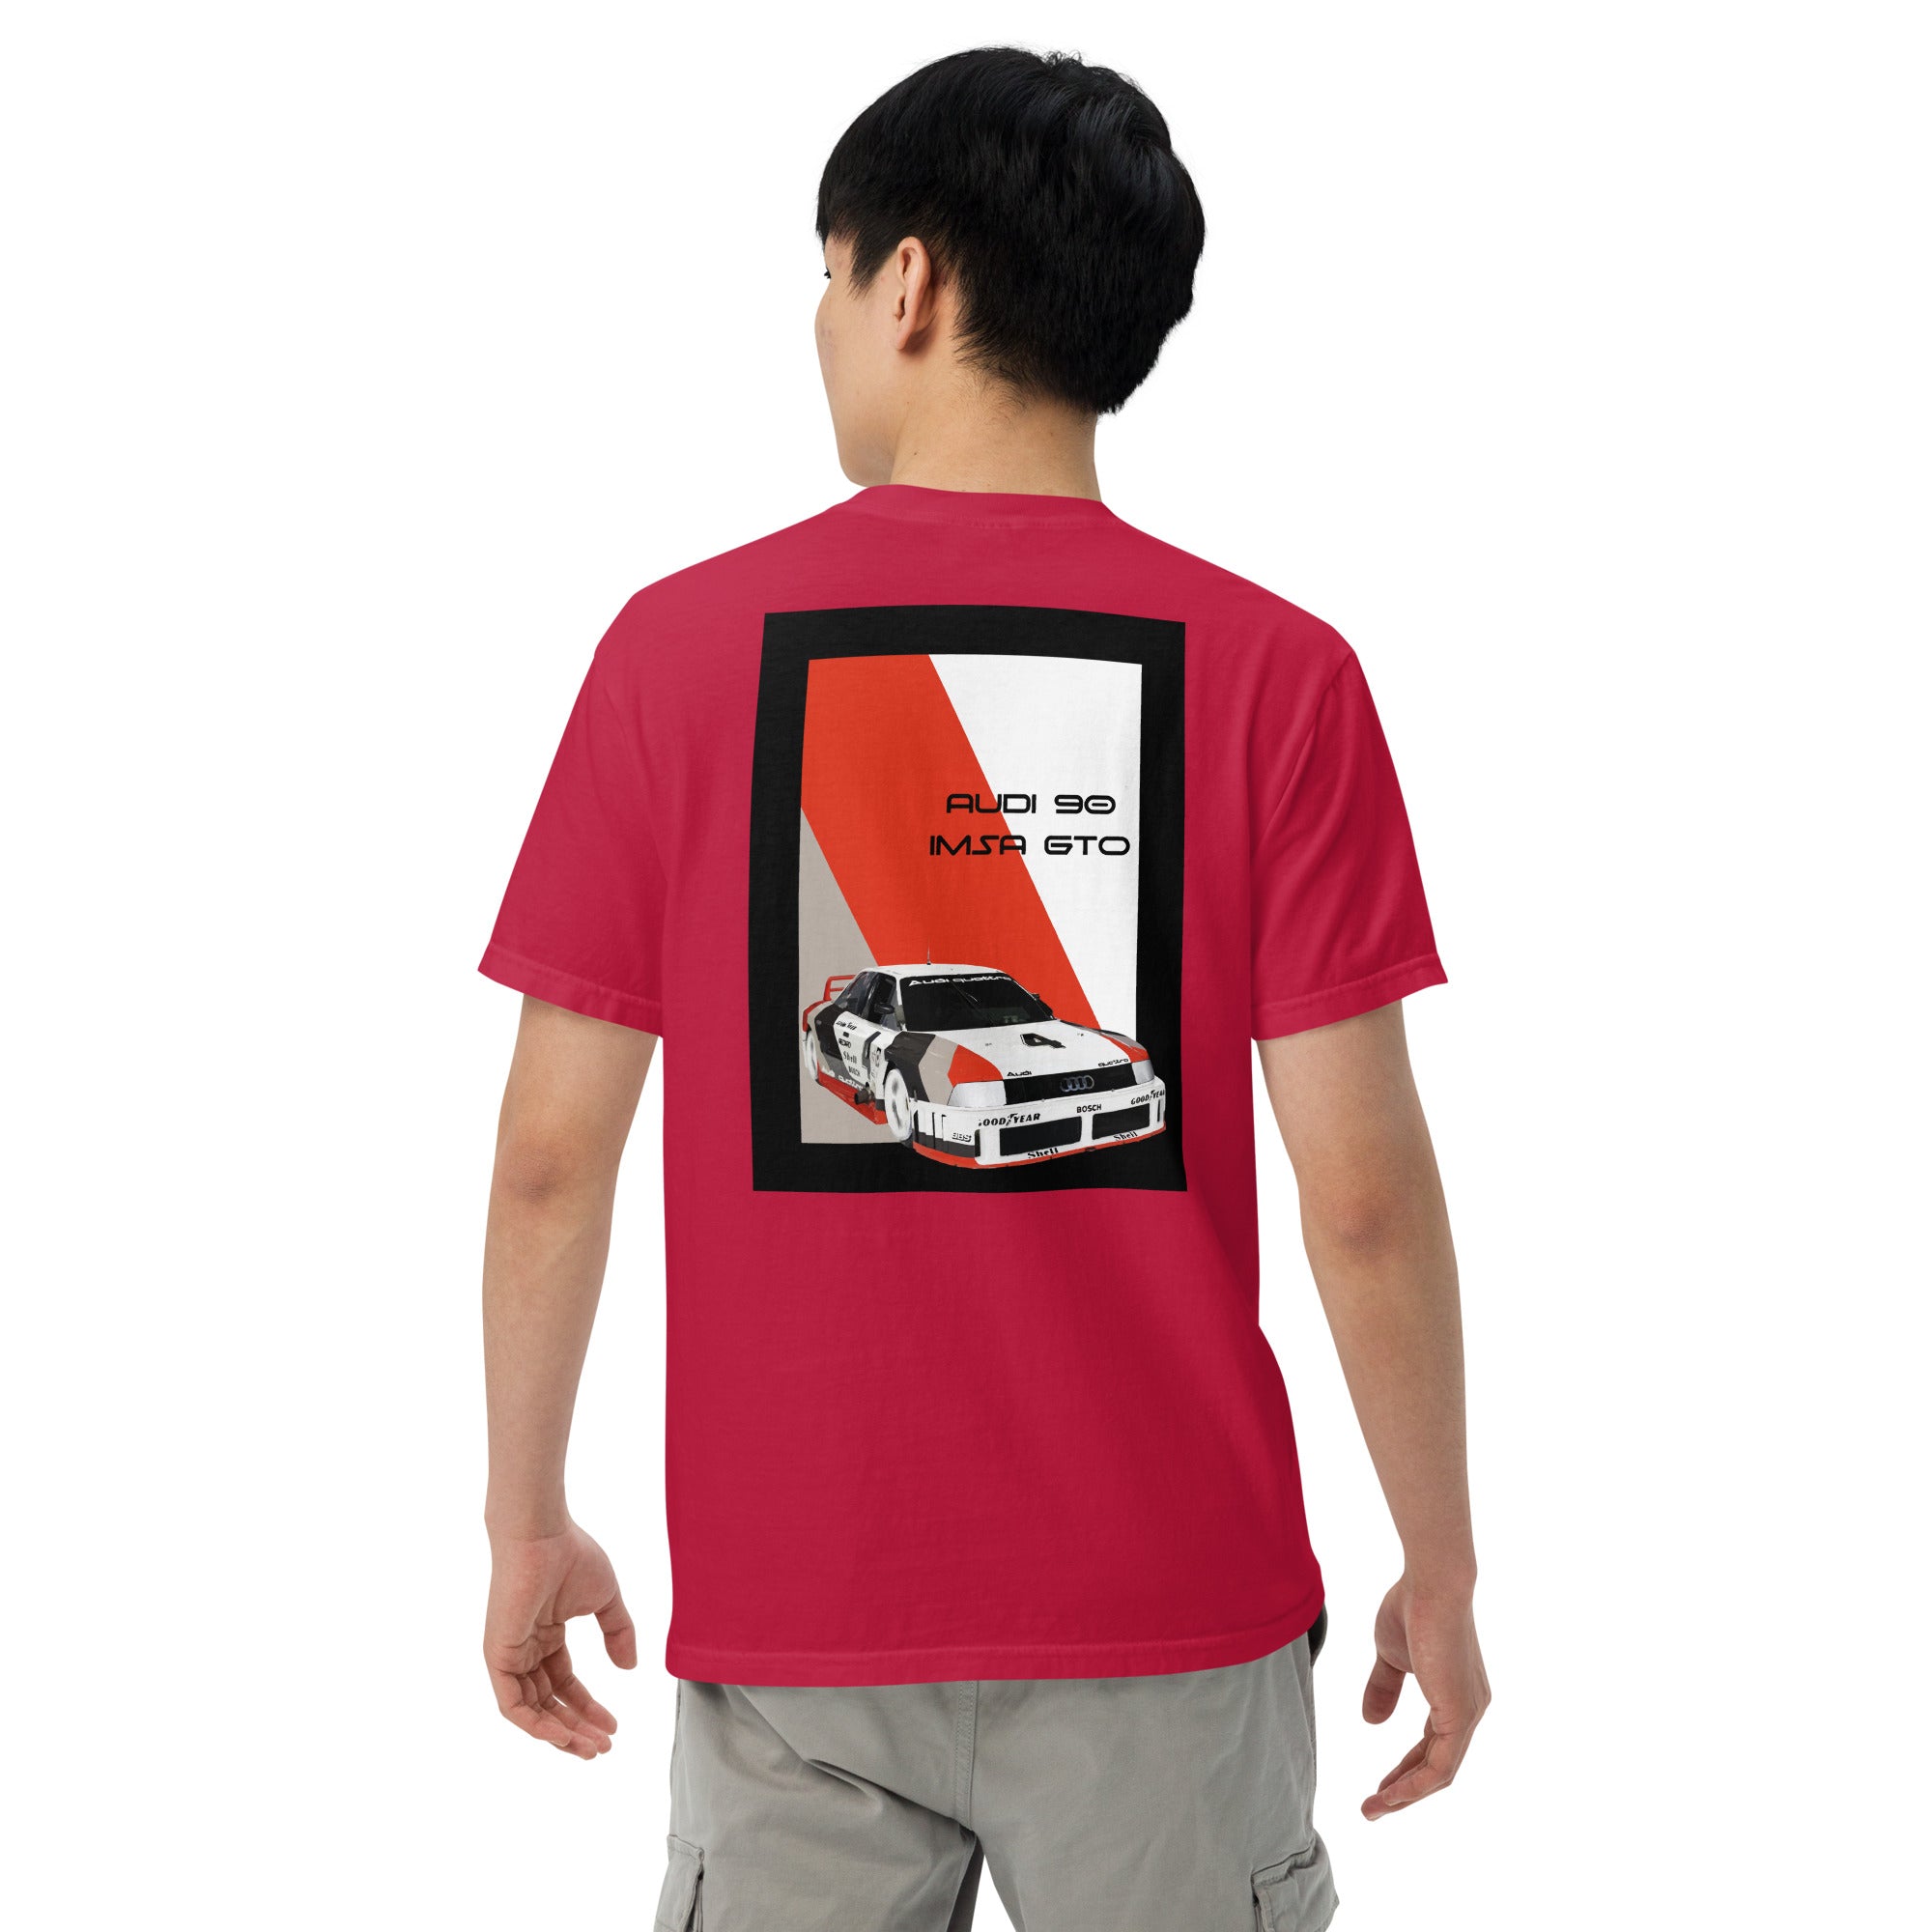 90: Audi 90 quattro GTO imsa race car t-shirt red rear full t-shirt